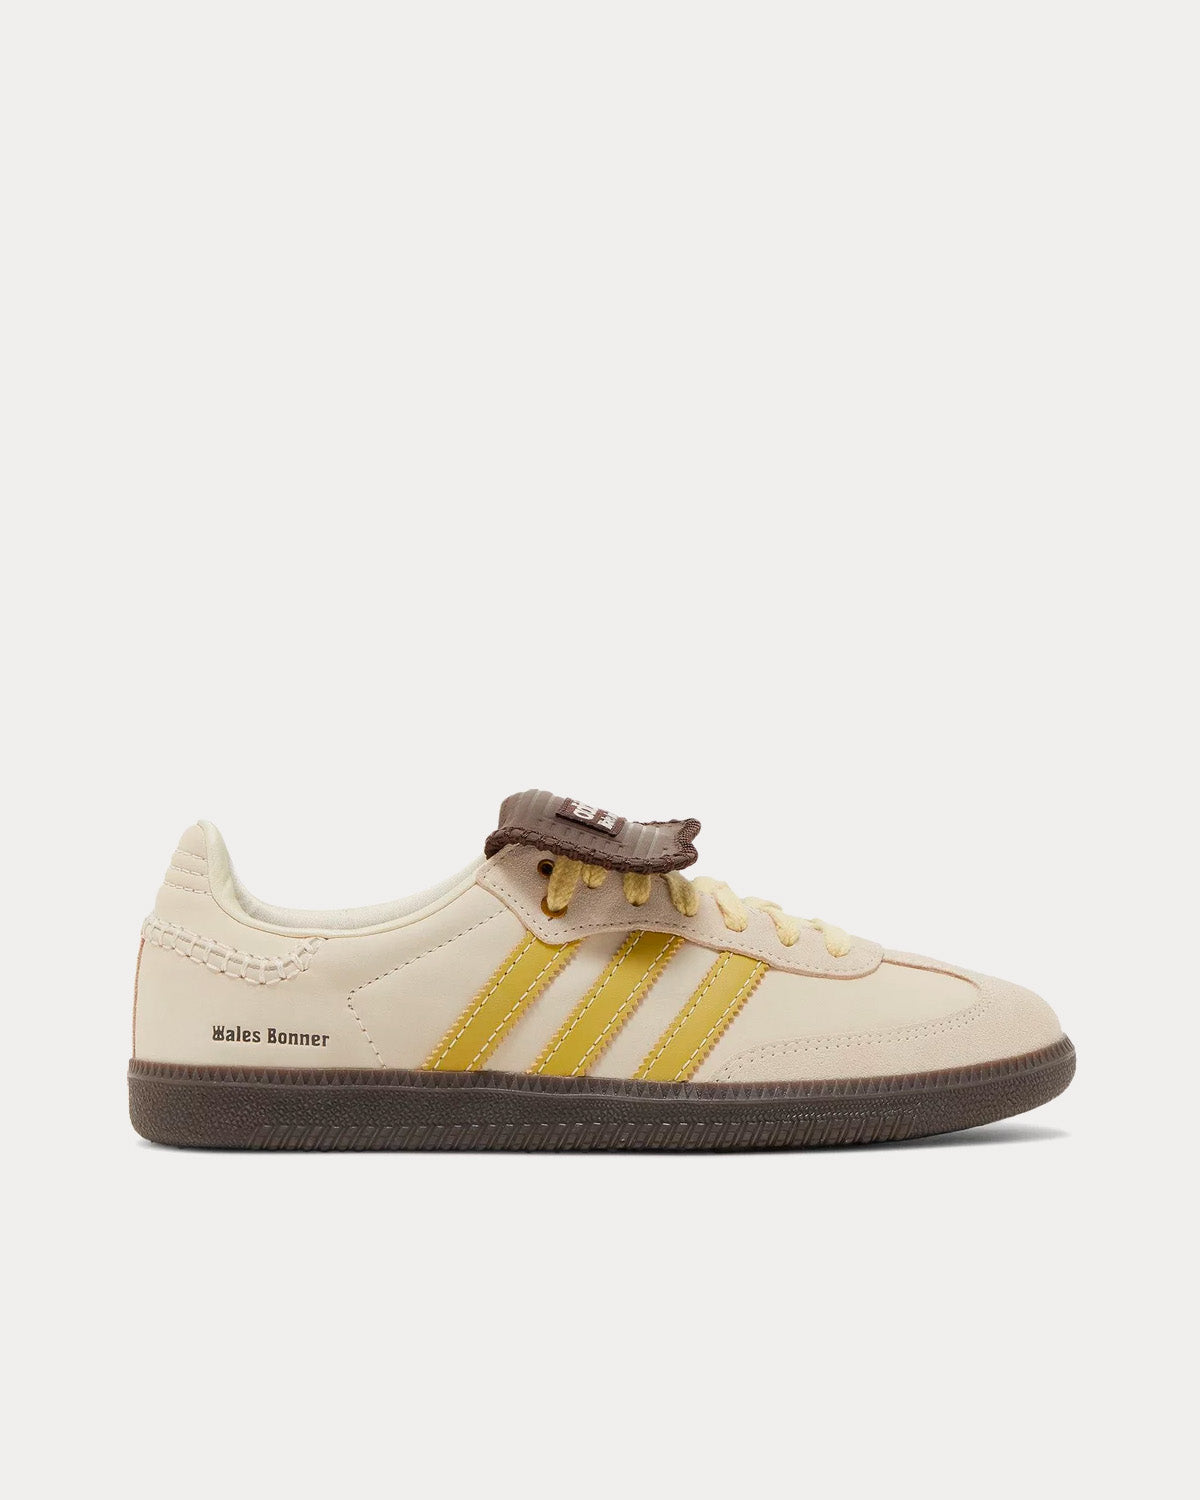 Adidas x Wales Bonner - Samba Cream / Yellow Low Top Sneakers